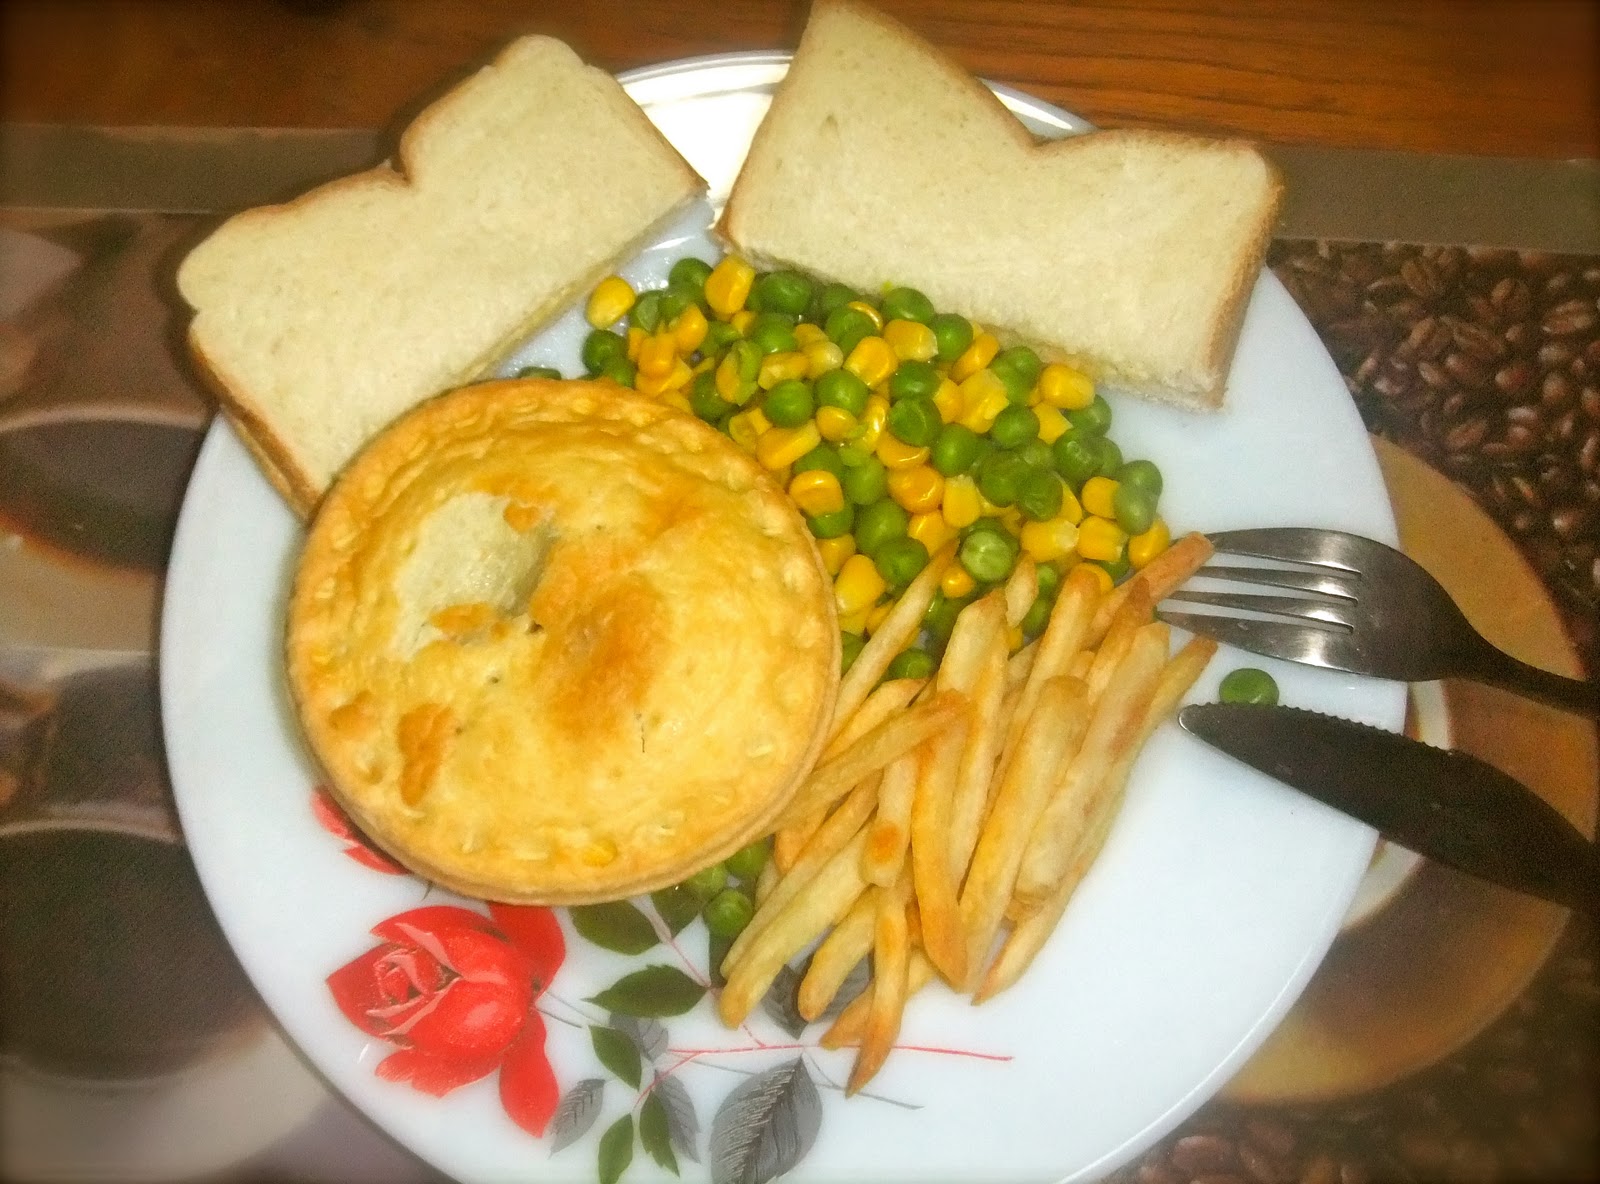 Just Another Dumpsite.: My Proper English Dinner